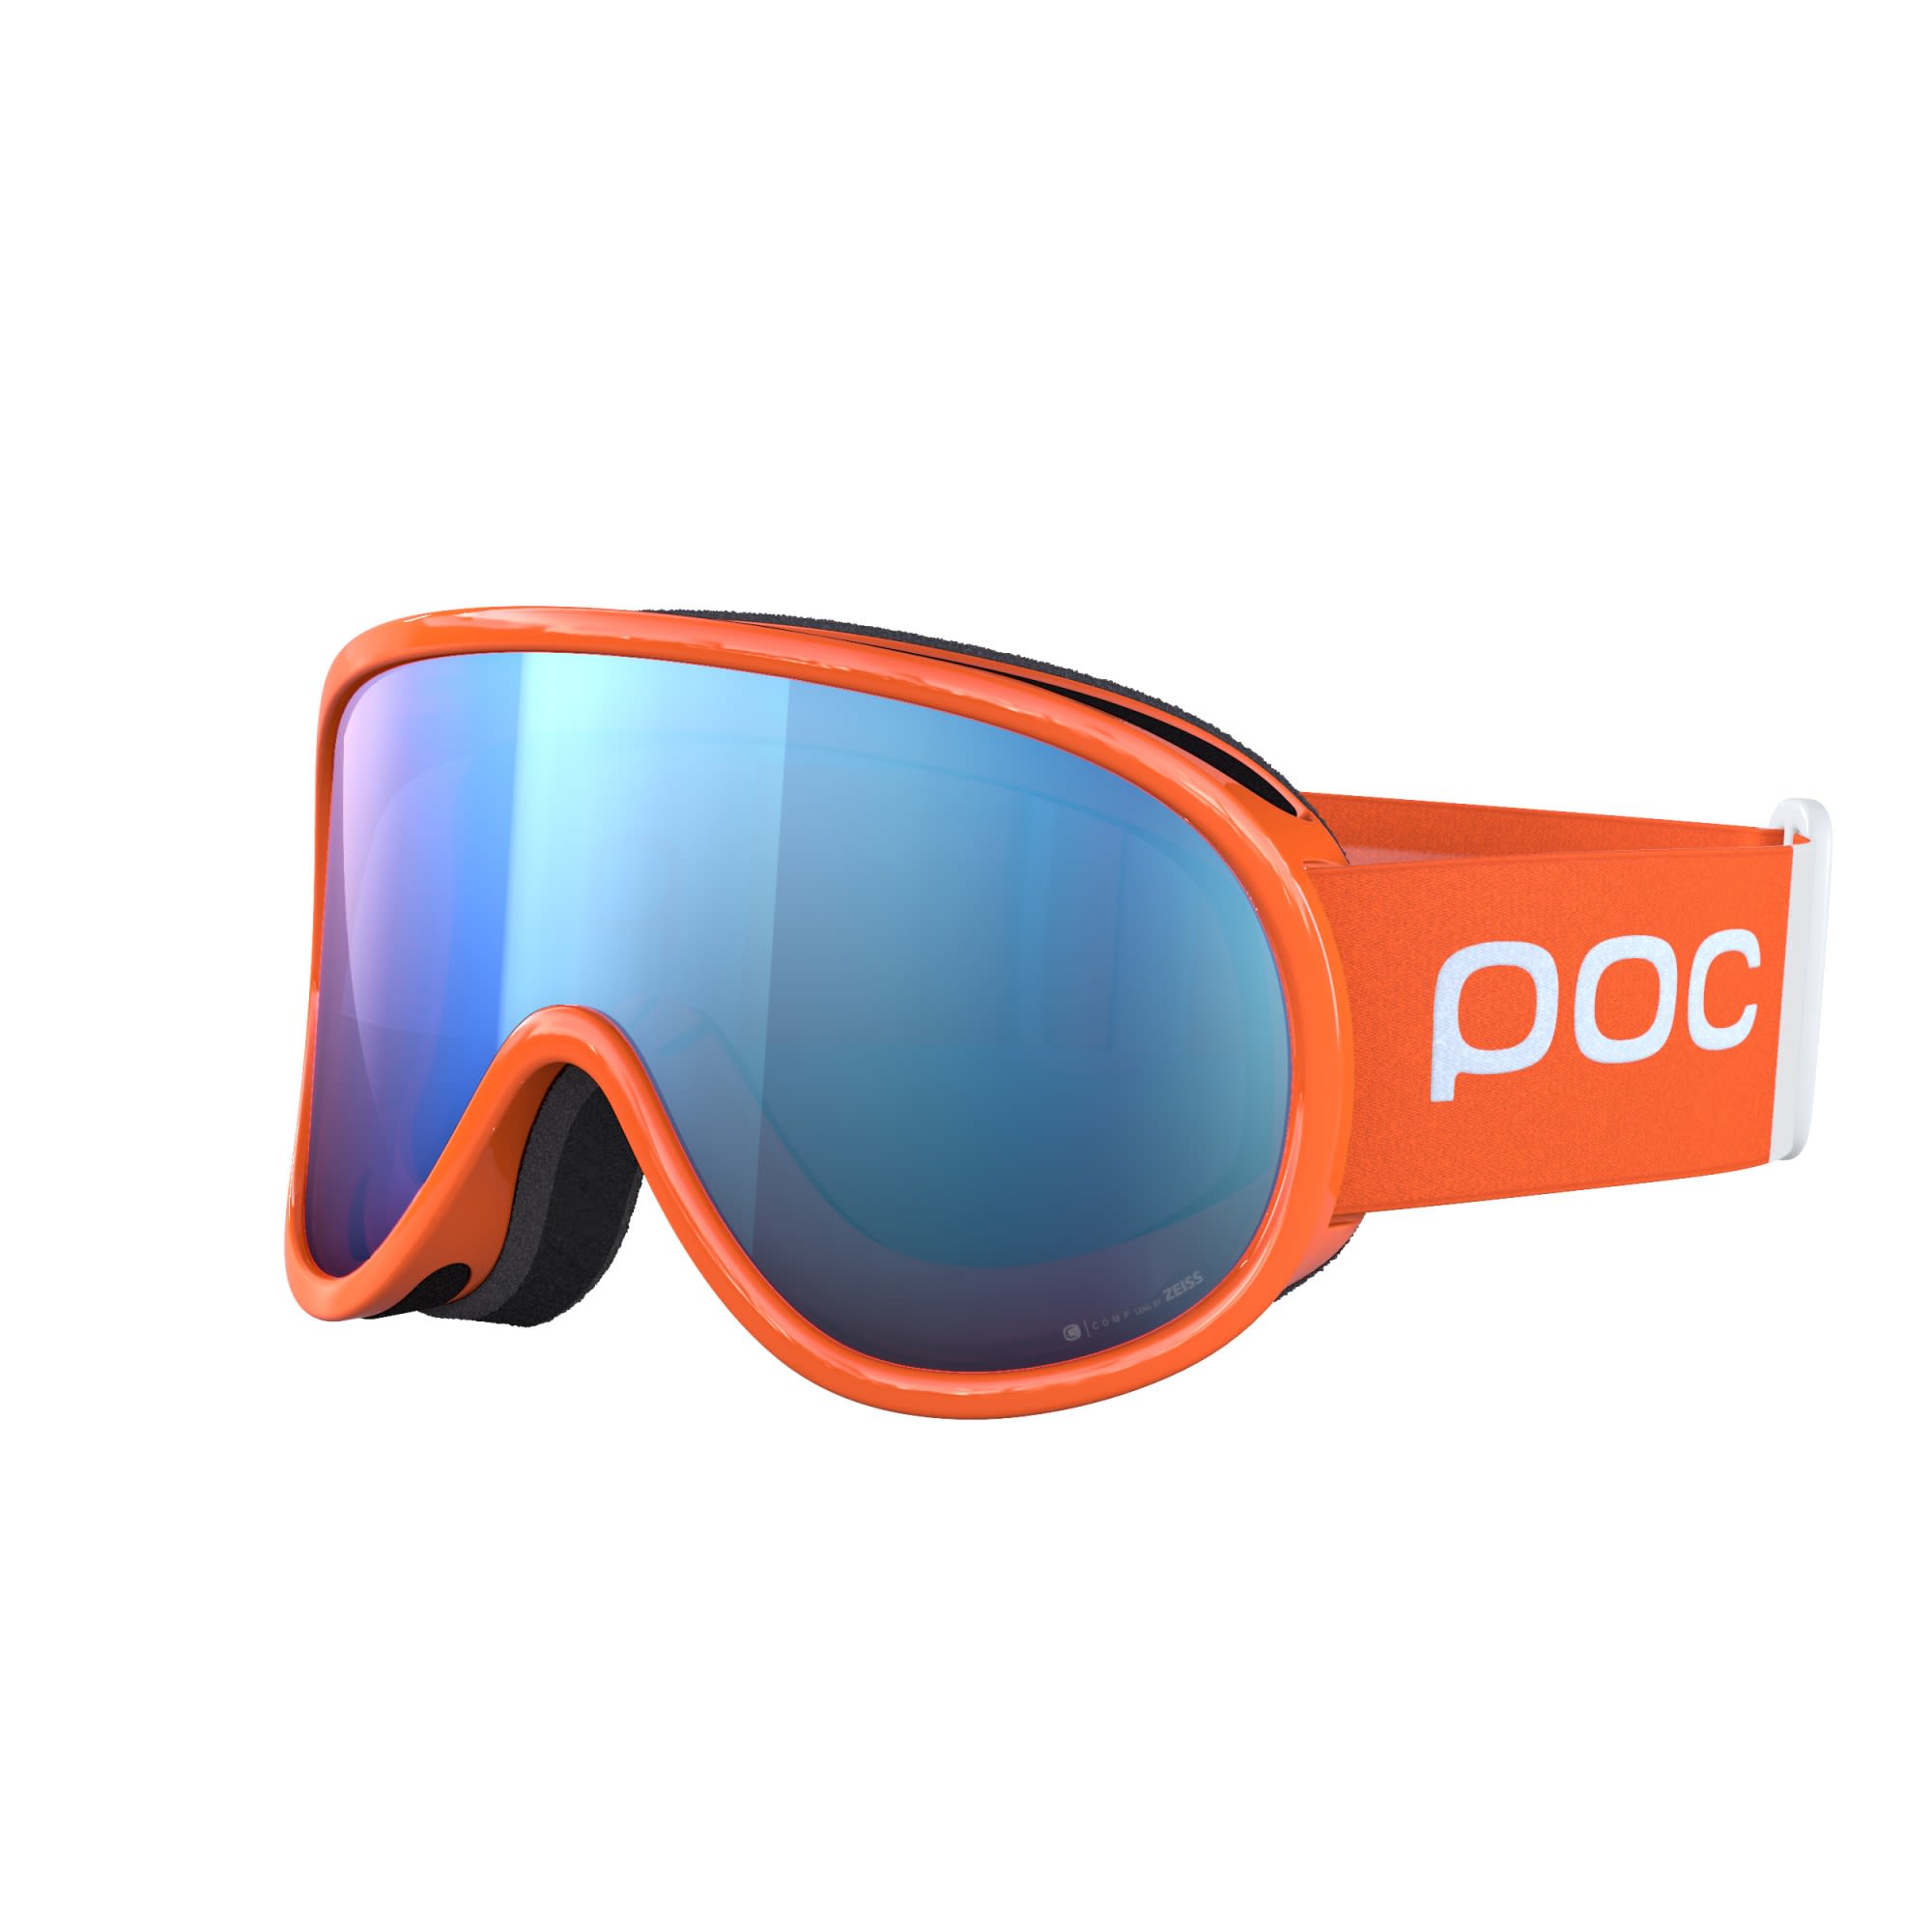 POC Komfortable innovative Ski und Snowboardbrille Fluorescent Orange - Spektris Blue